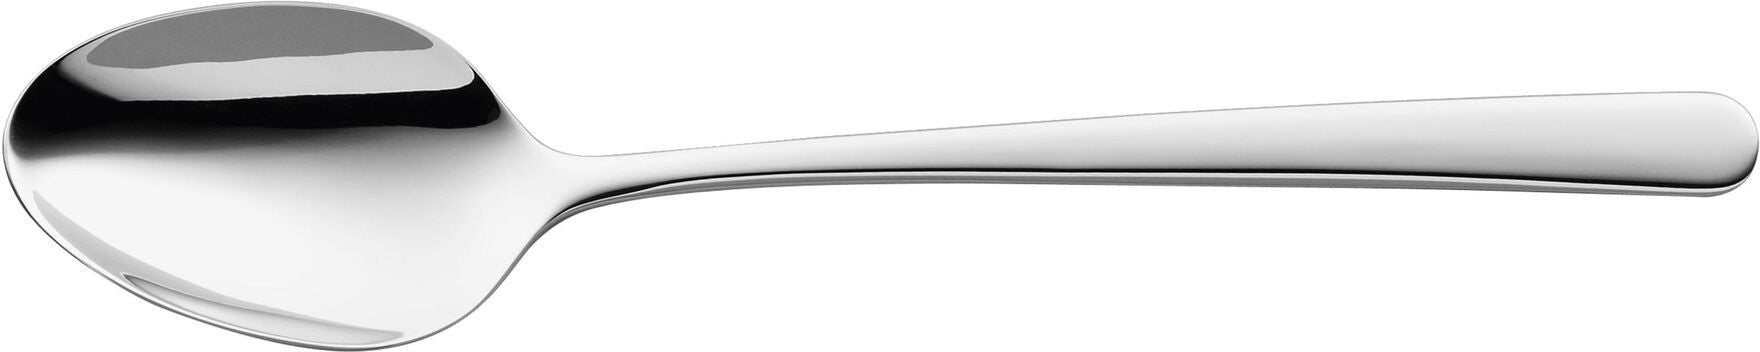 Zwilling - Twin Nova Stainless Steel Table Spoon - 07141-093